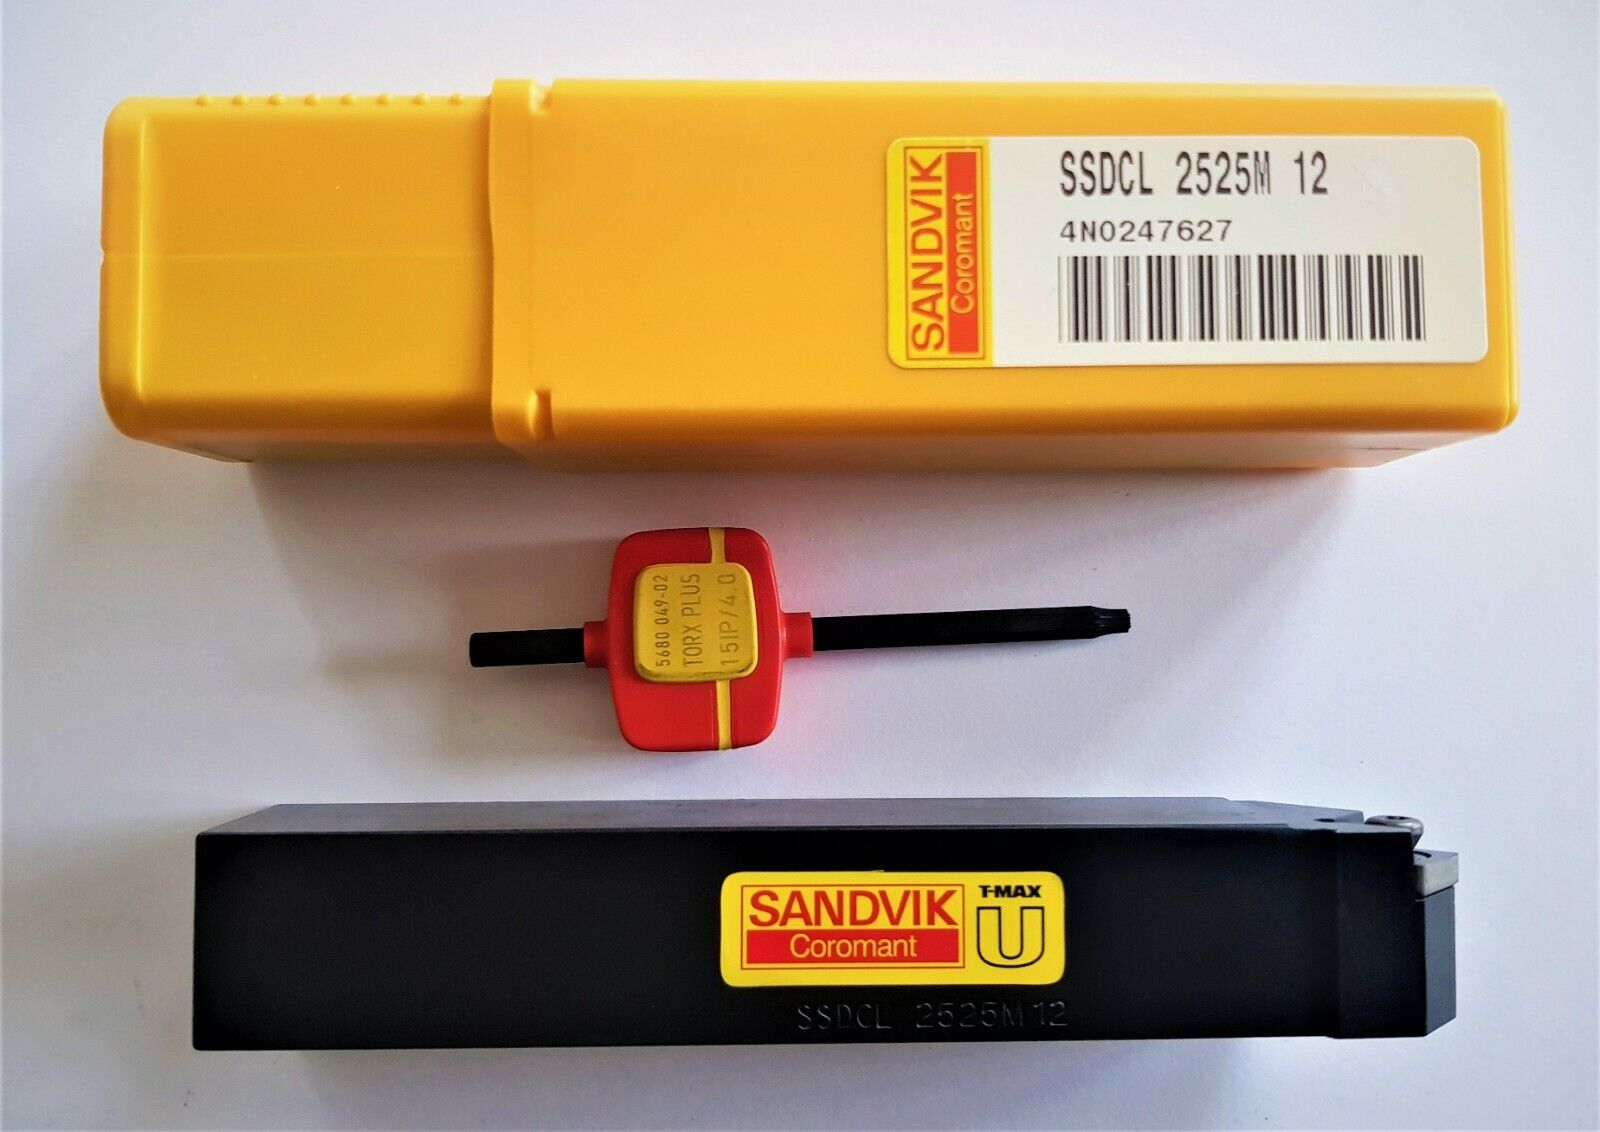 Sandvik SSDCL 2525M 12 CoroTurn 107 Shank Tool for Turning eBay